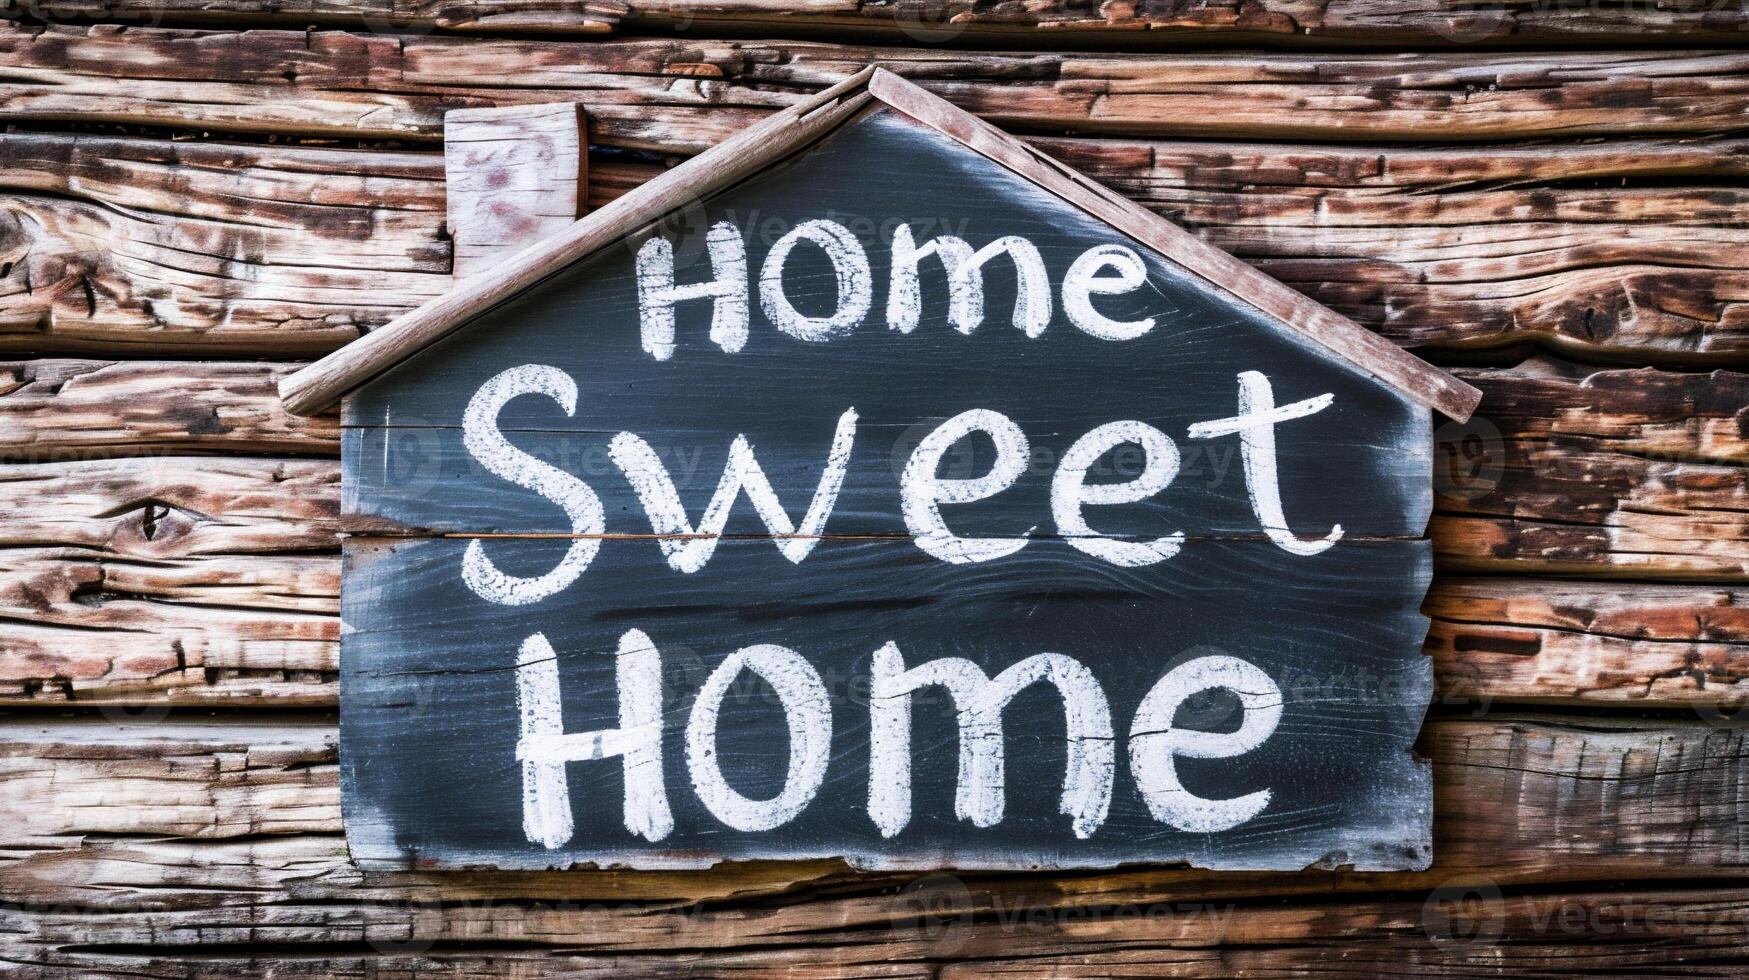 ai generado hogar dulce hogar escrito en un pizarra en un rústico de madera antecedentes foto